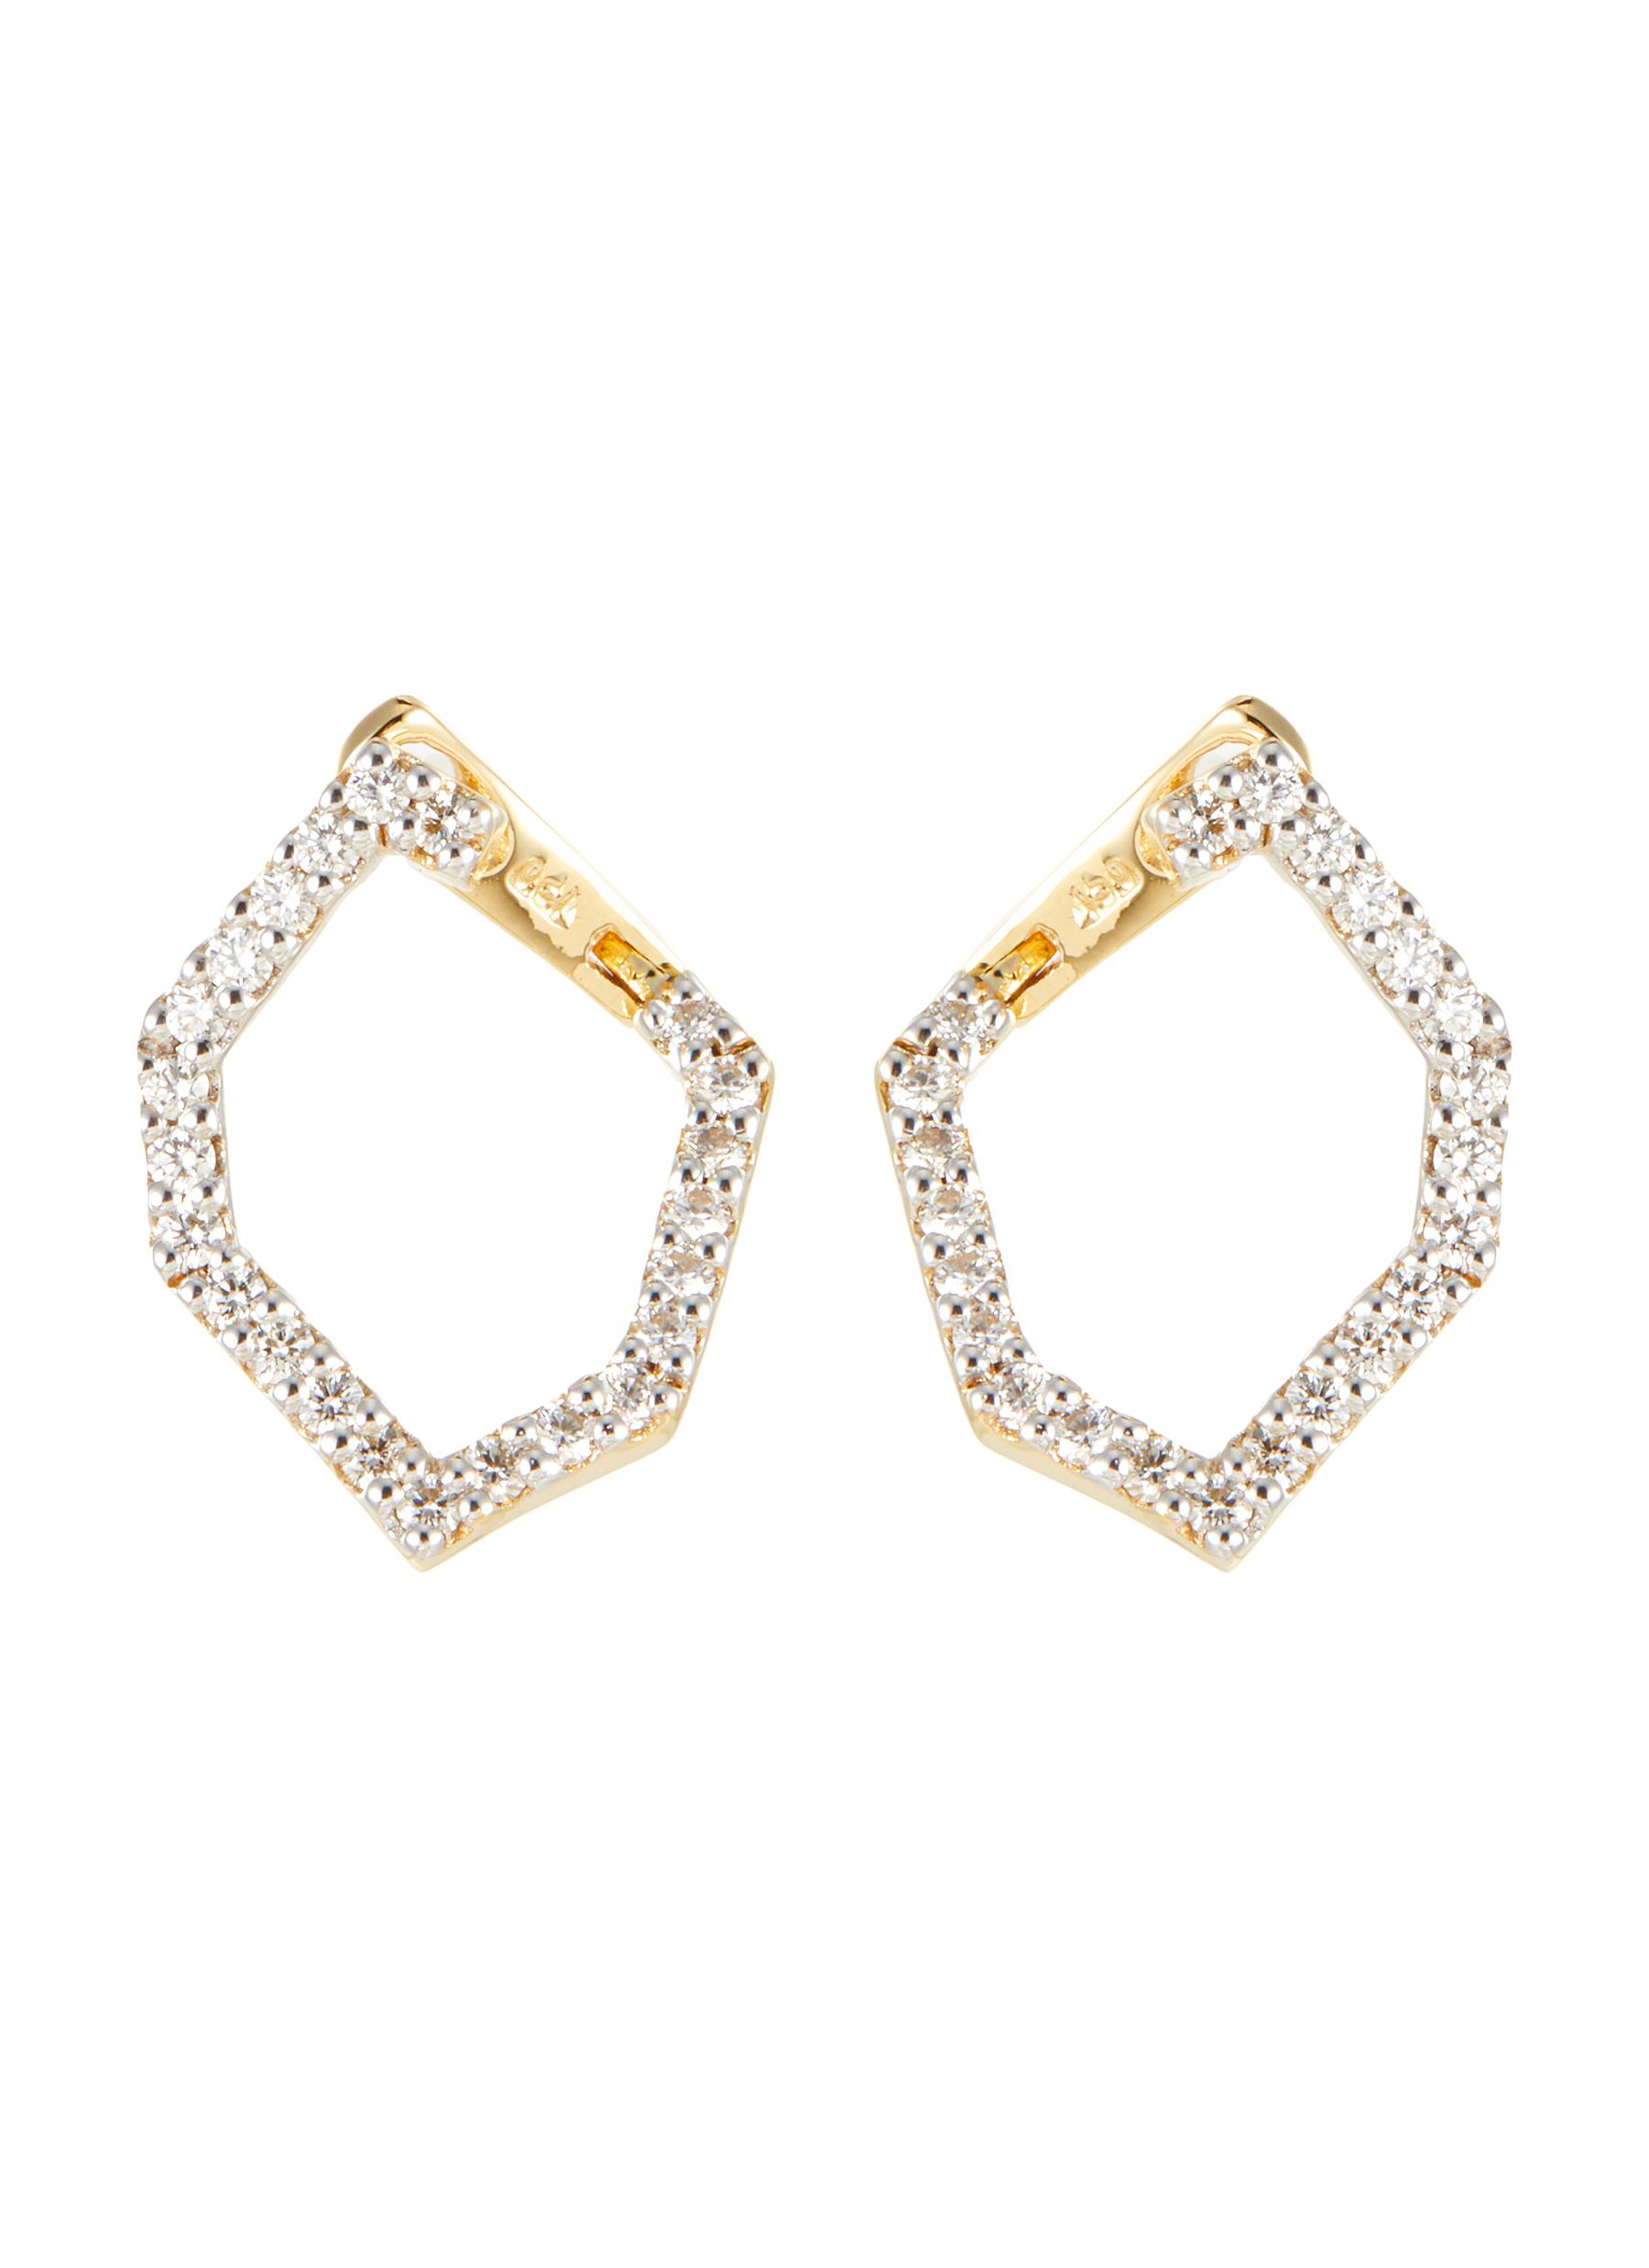 KAVANT & SHARART ‘Origami Link No.5' Diamond 18K Gold Link Earrings